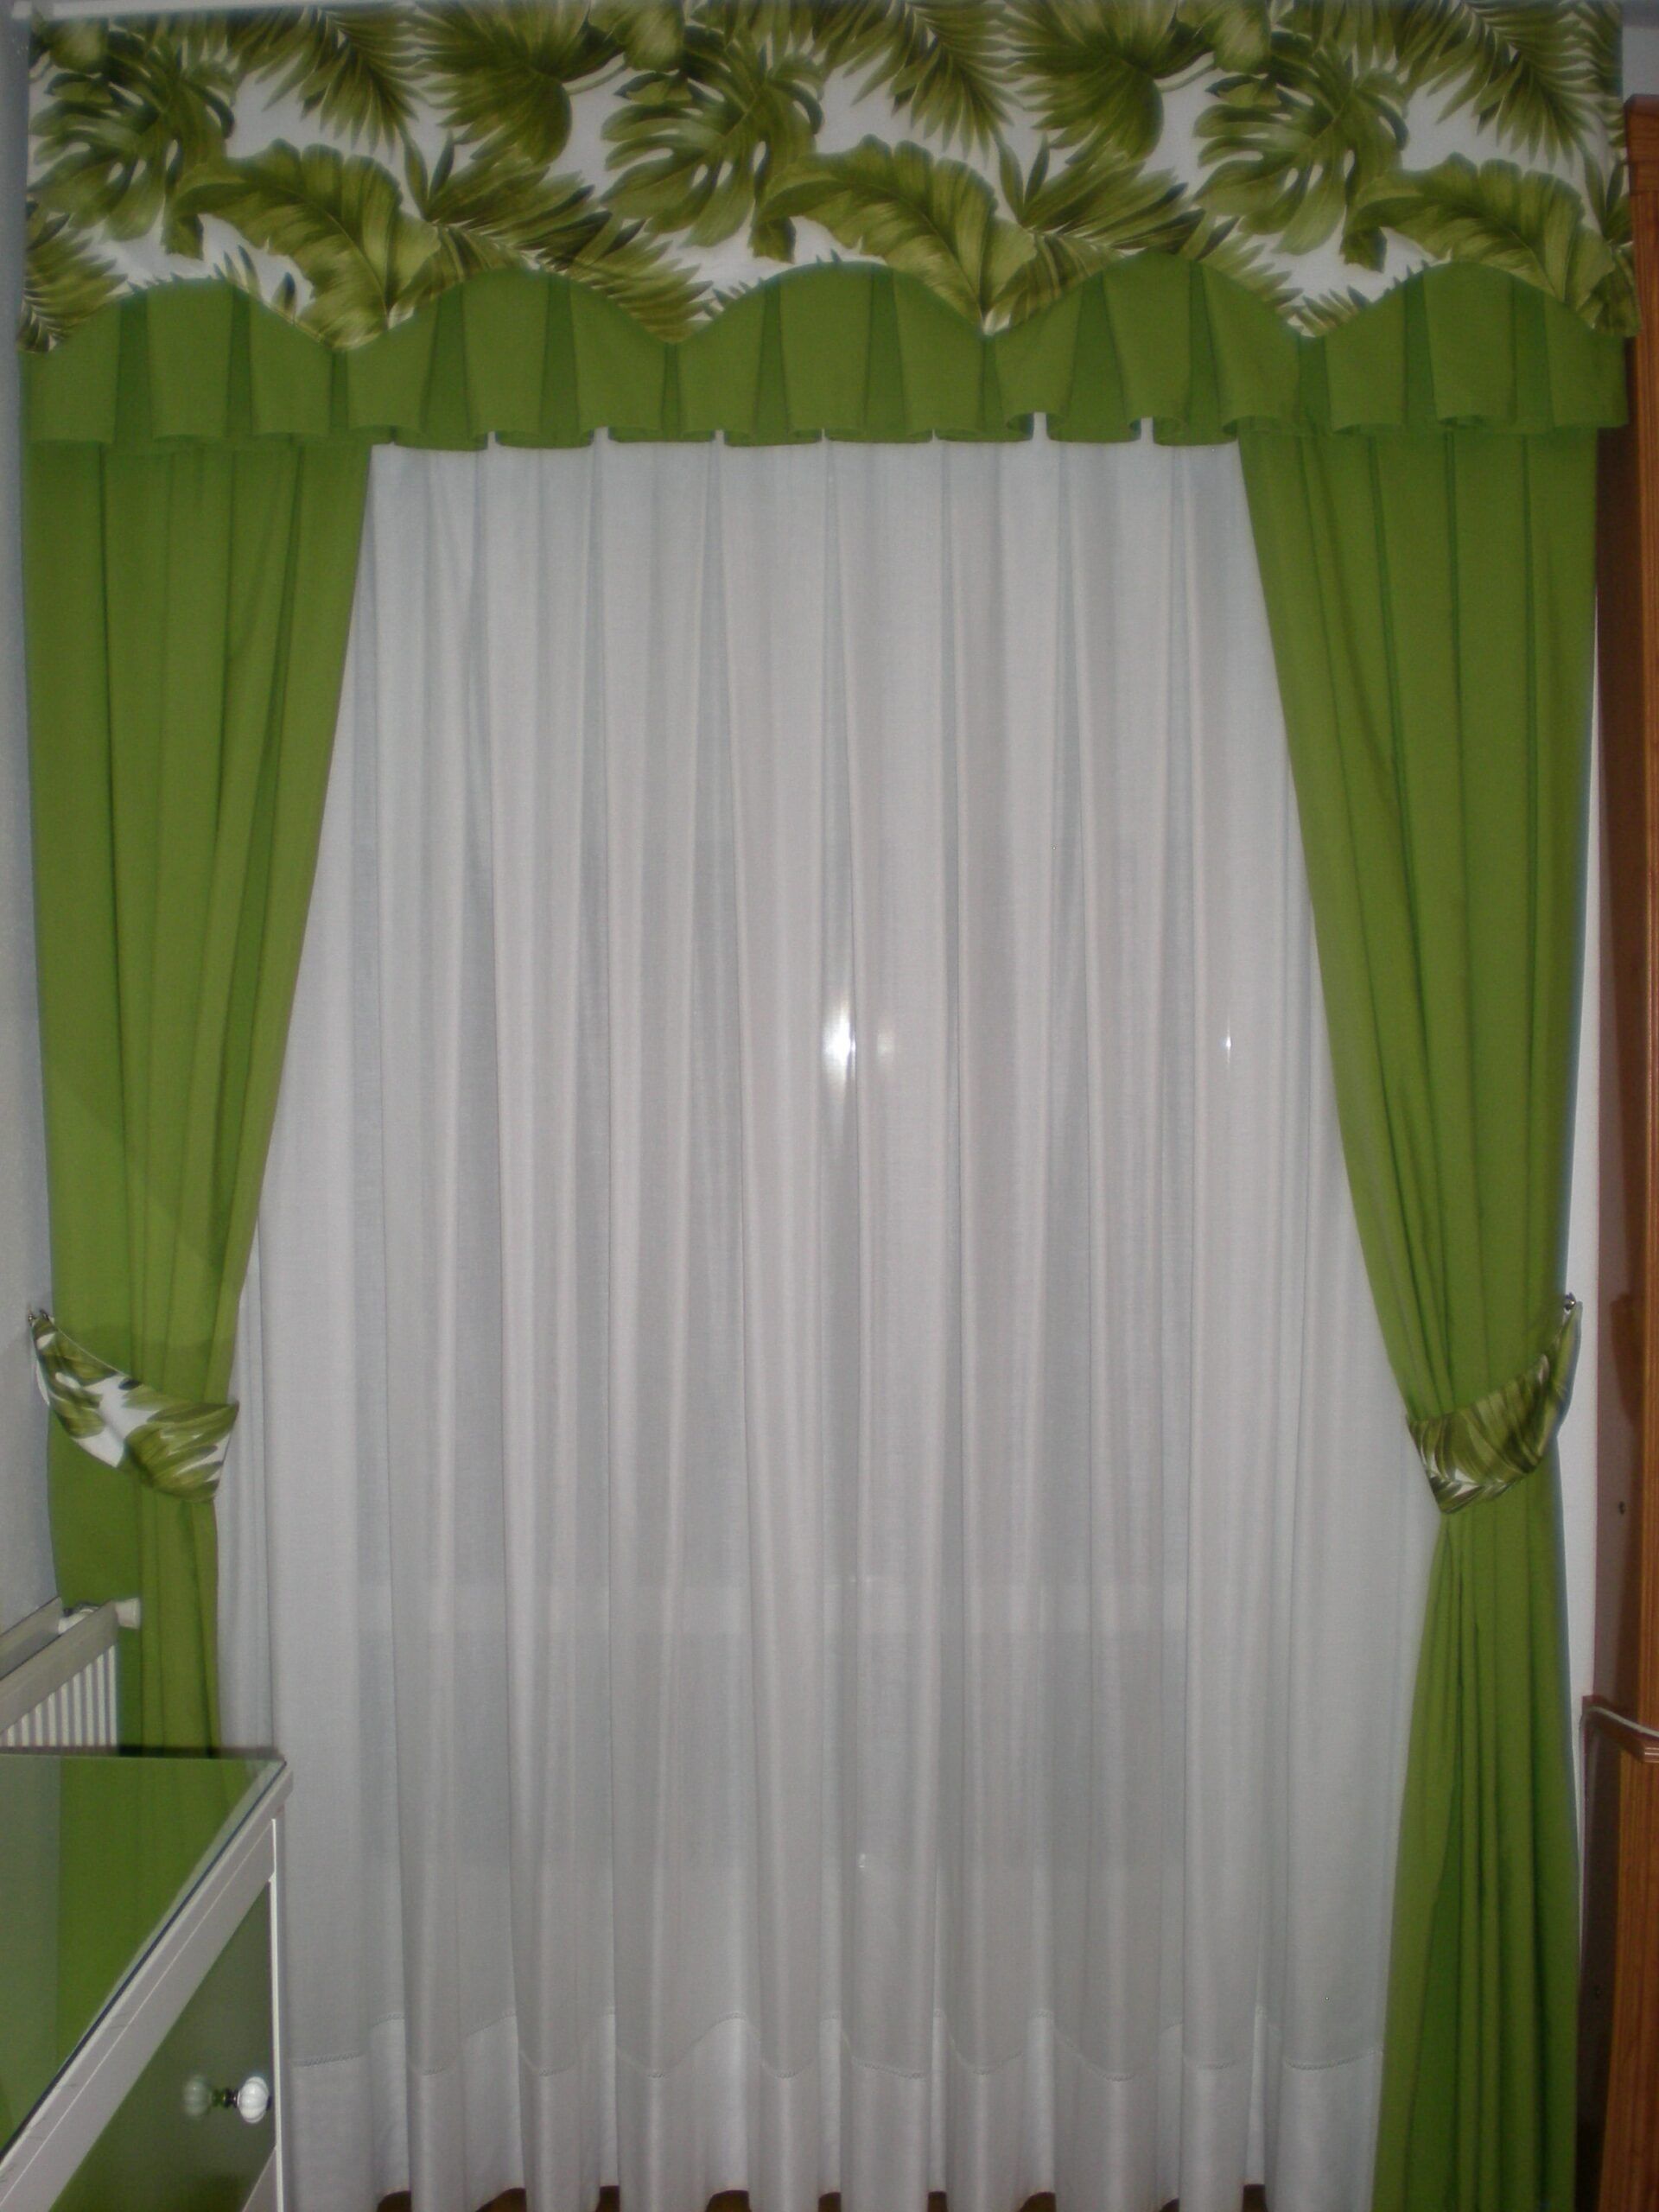 Las cortinas